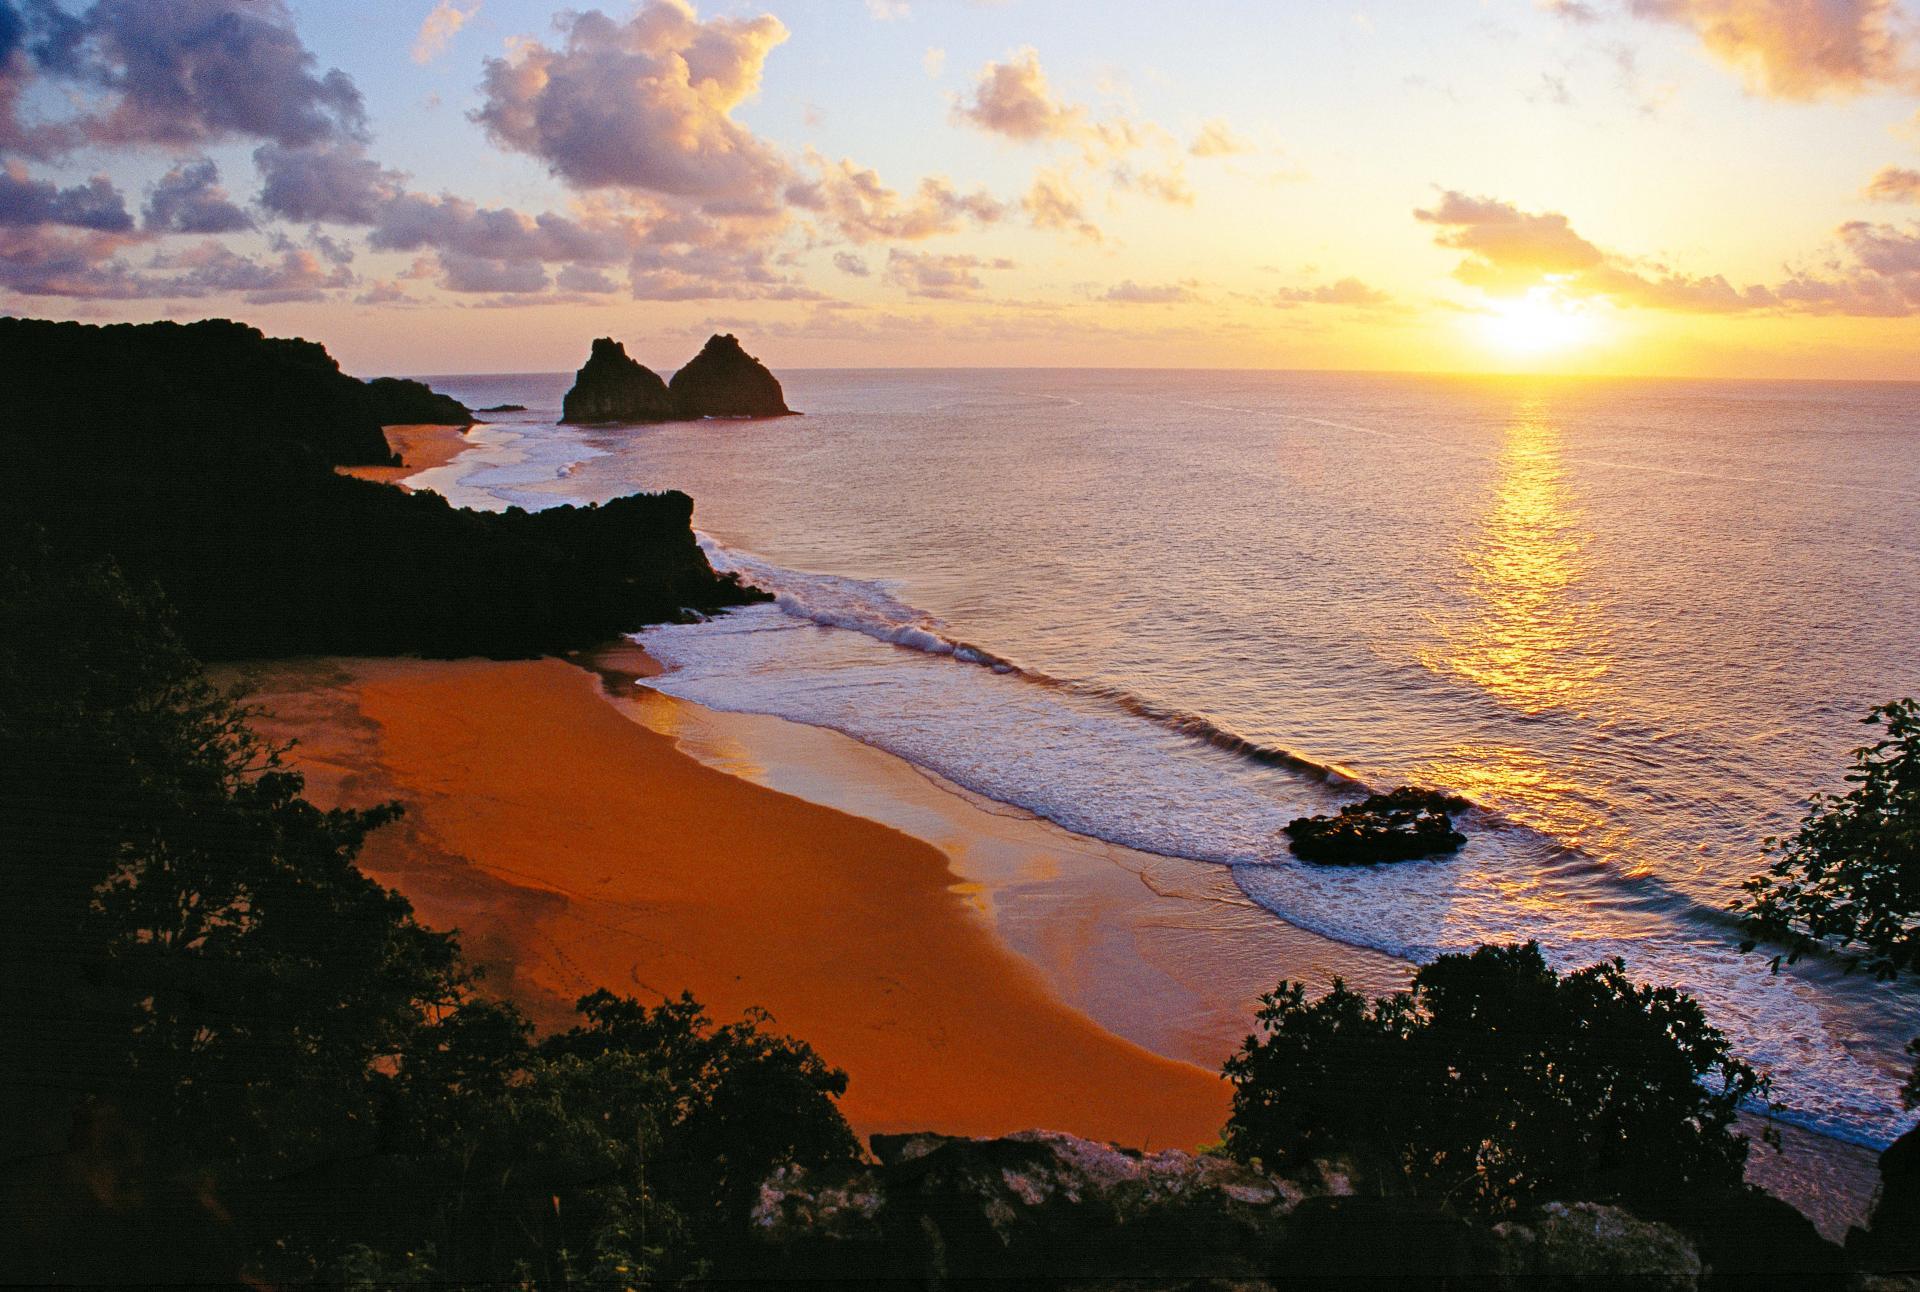 Sunset on the romantic island of Fernando de Noronha.